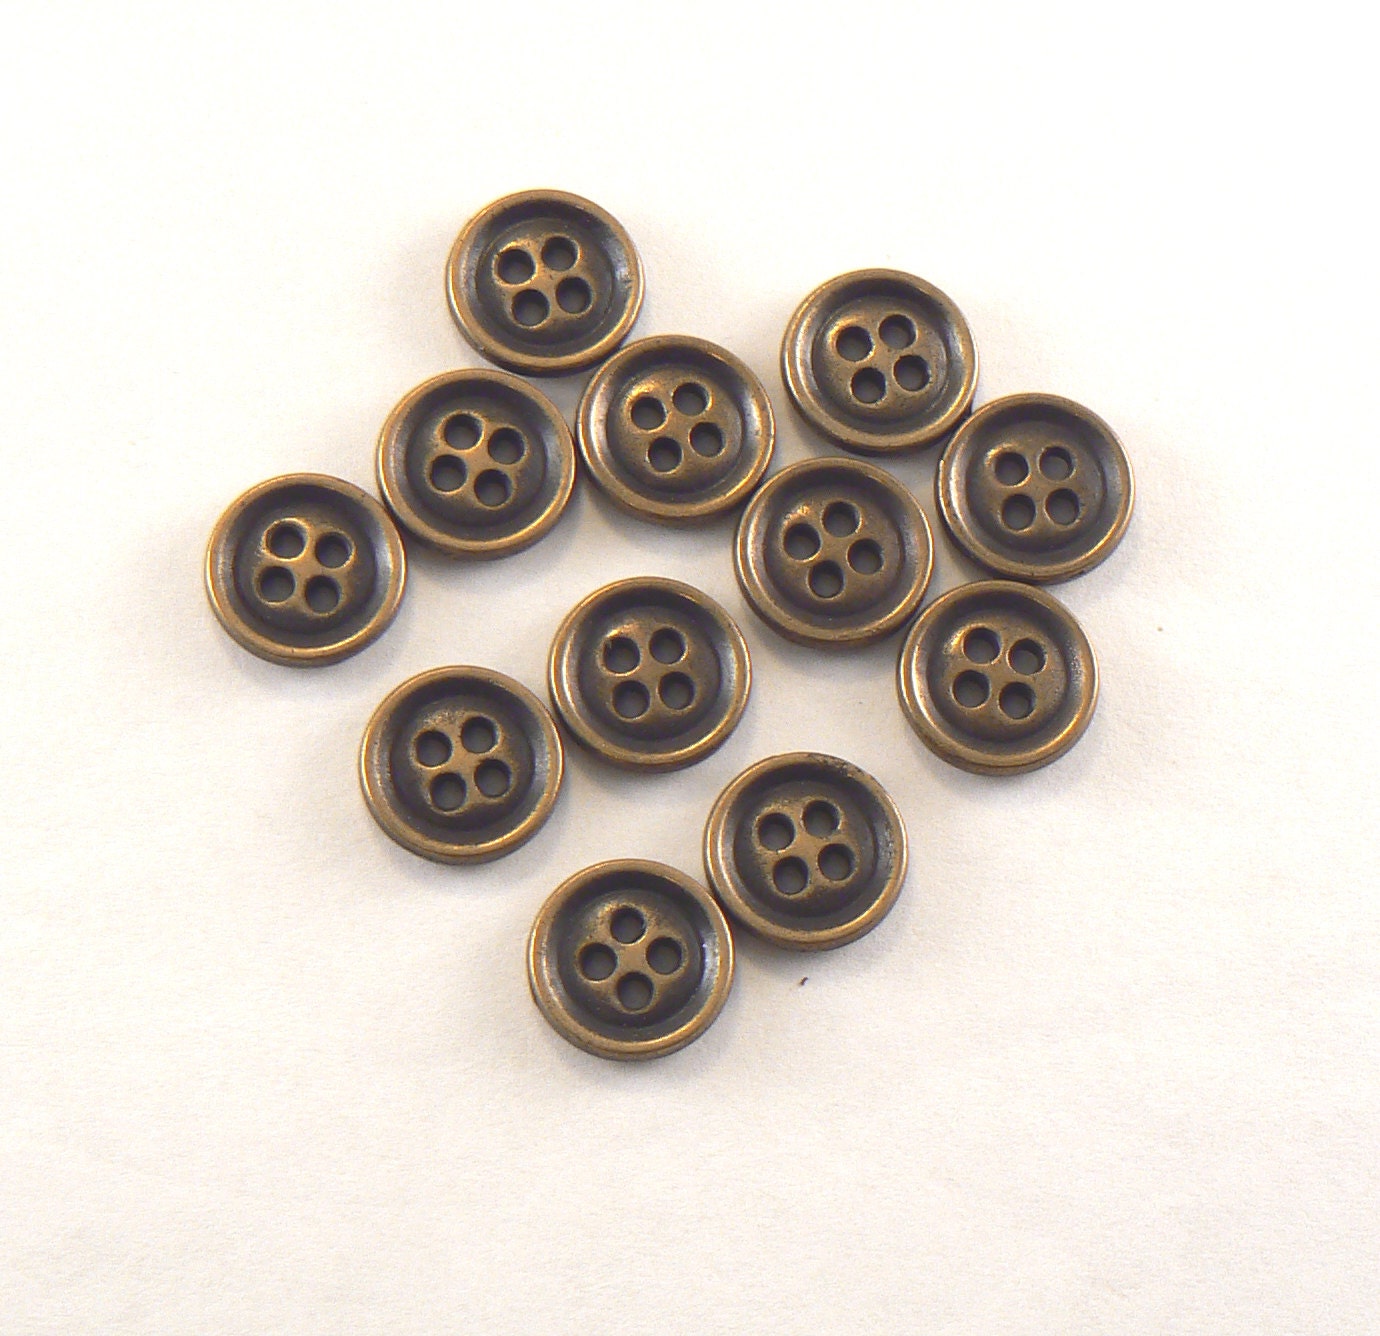 12 12 mm Cast Metal Buttons Antique Brass Tone 4 Hole